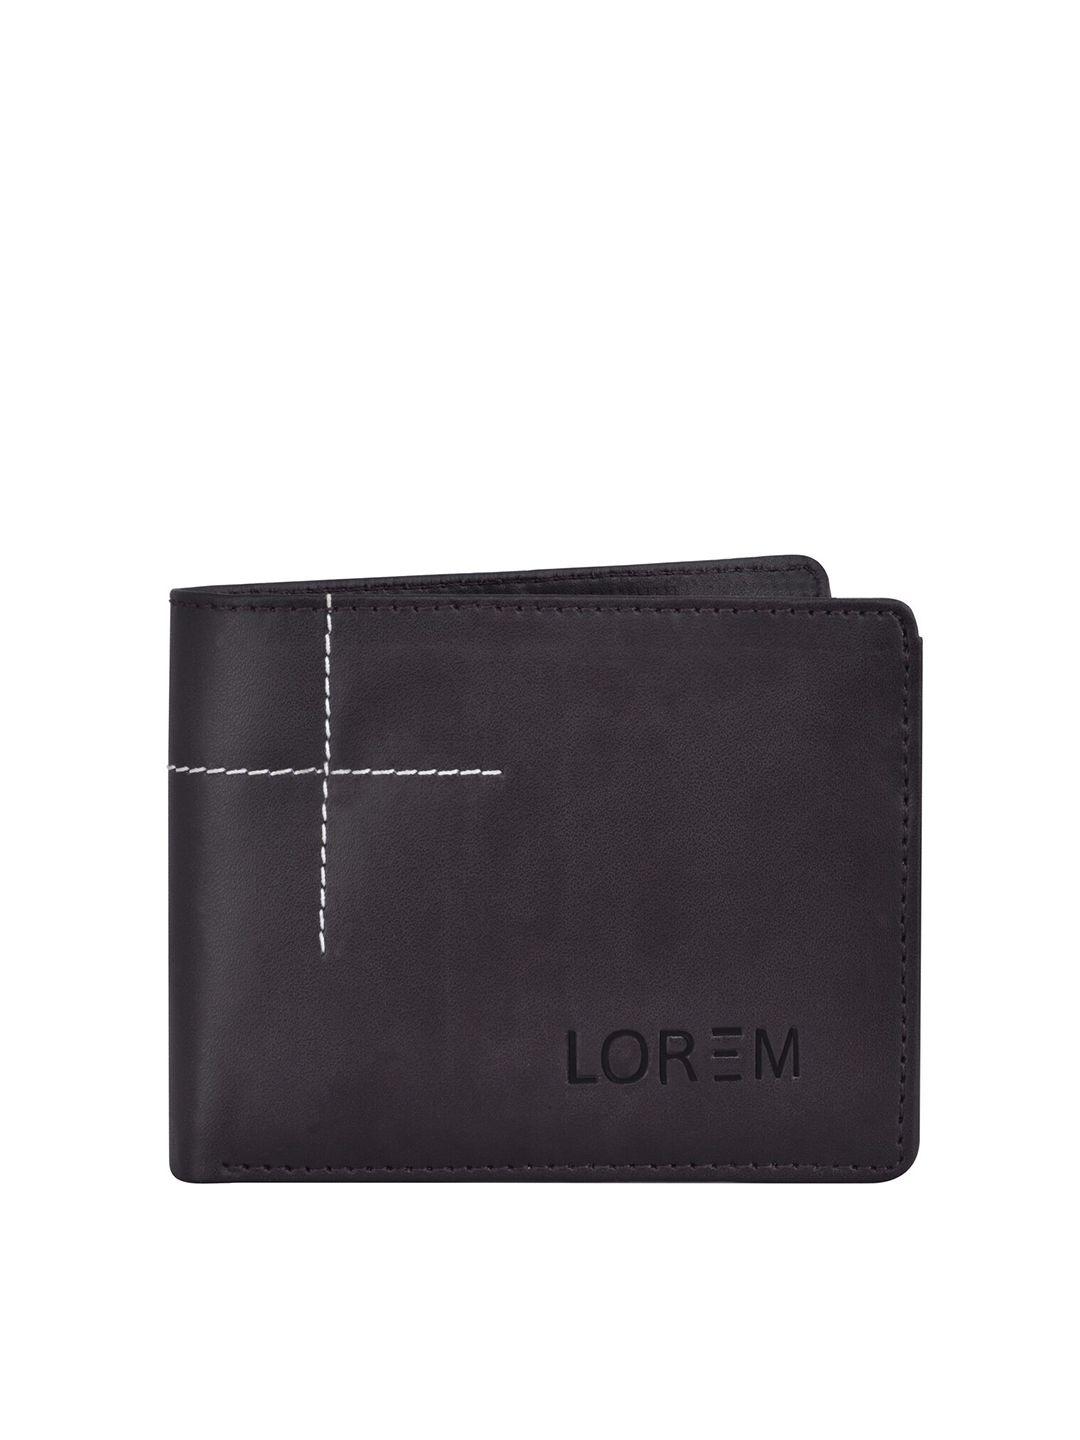 lorem men brown & white two fold wallet with sim card holder